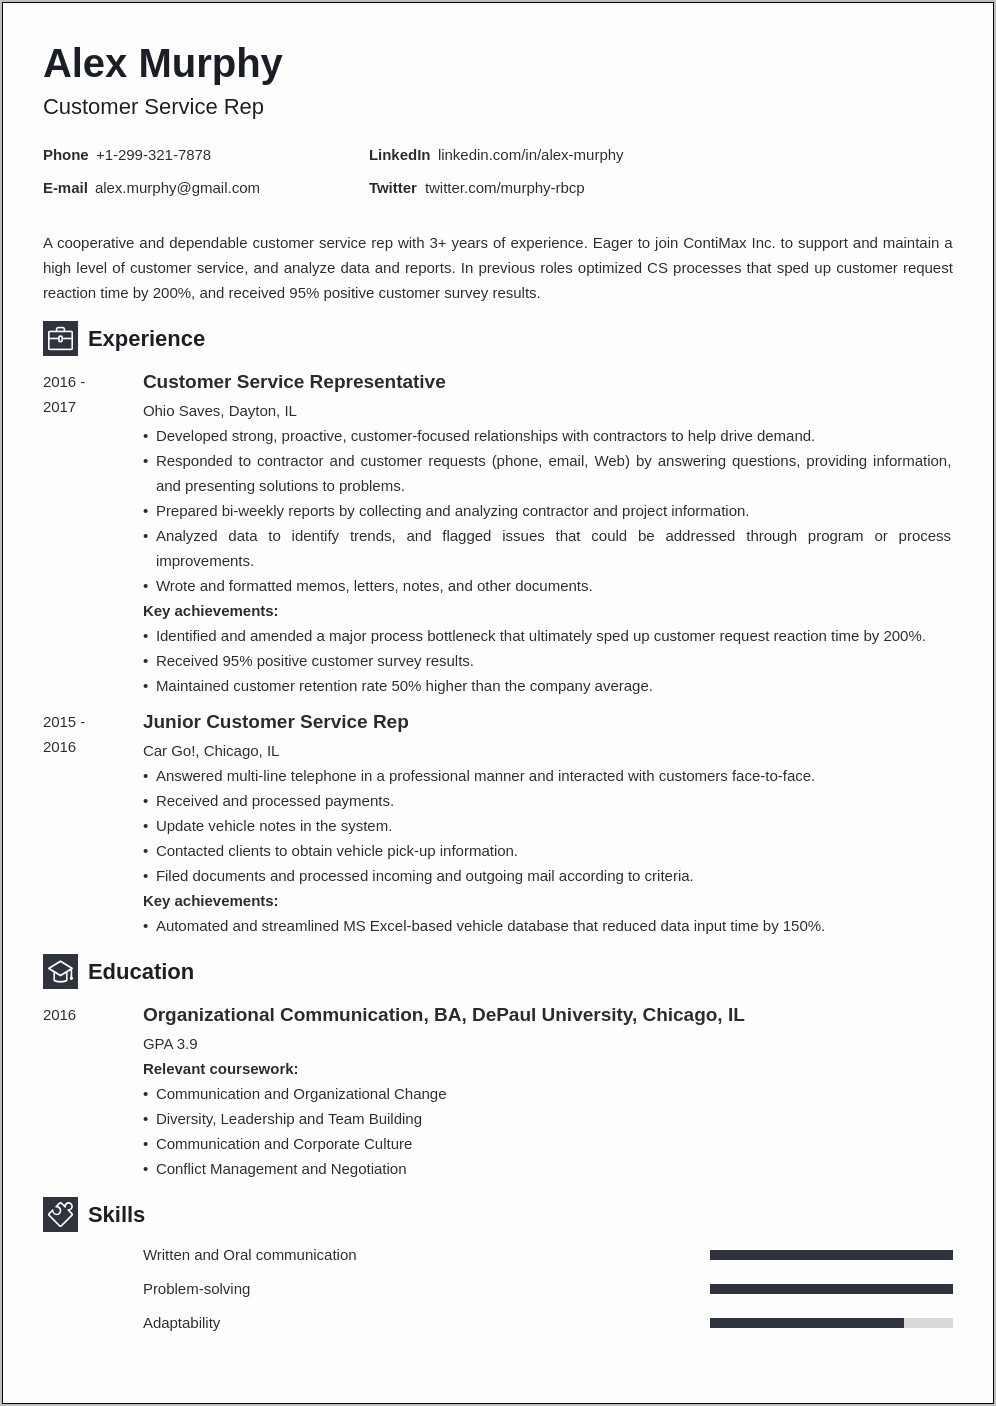 Skills Section Of Resume Customer Service